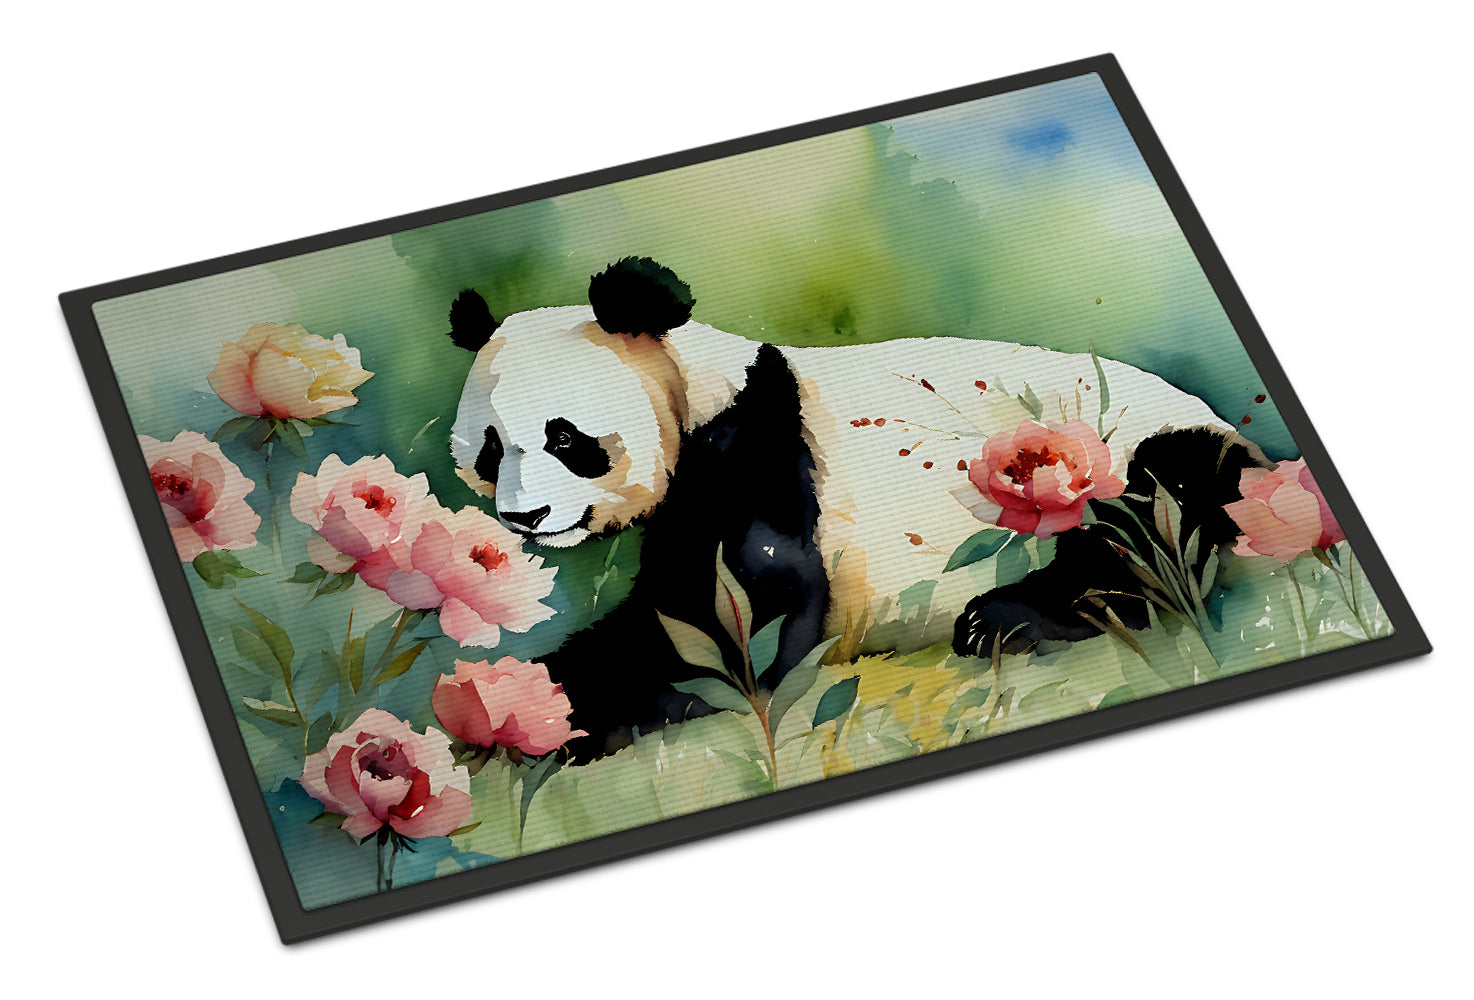 Buy this Panda Doormat